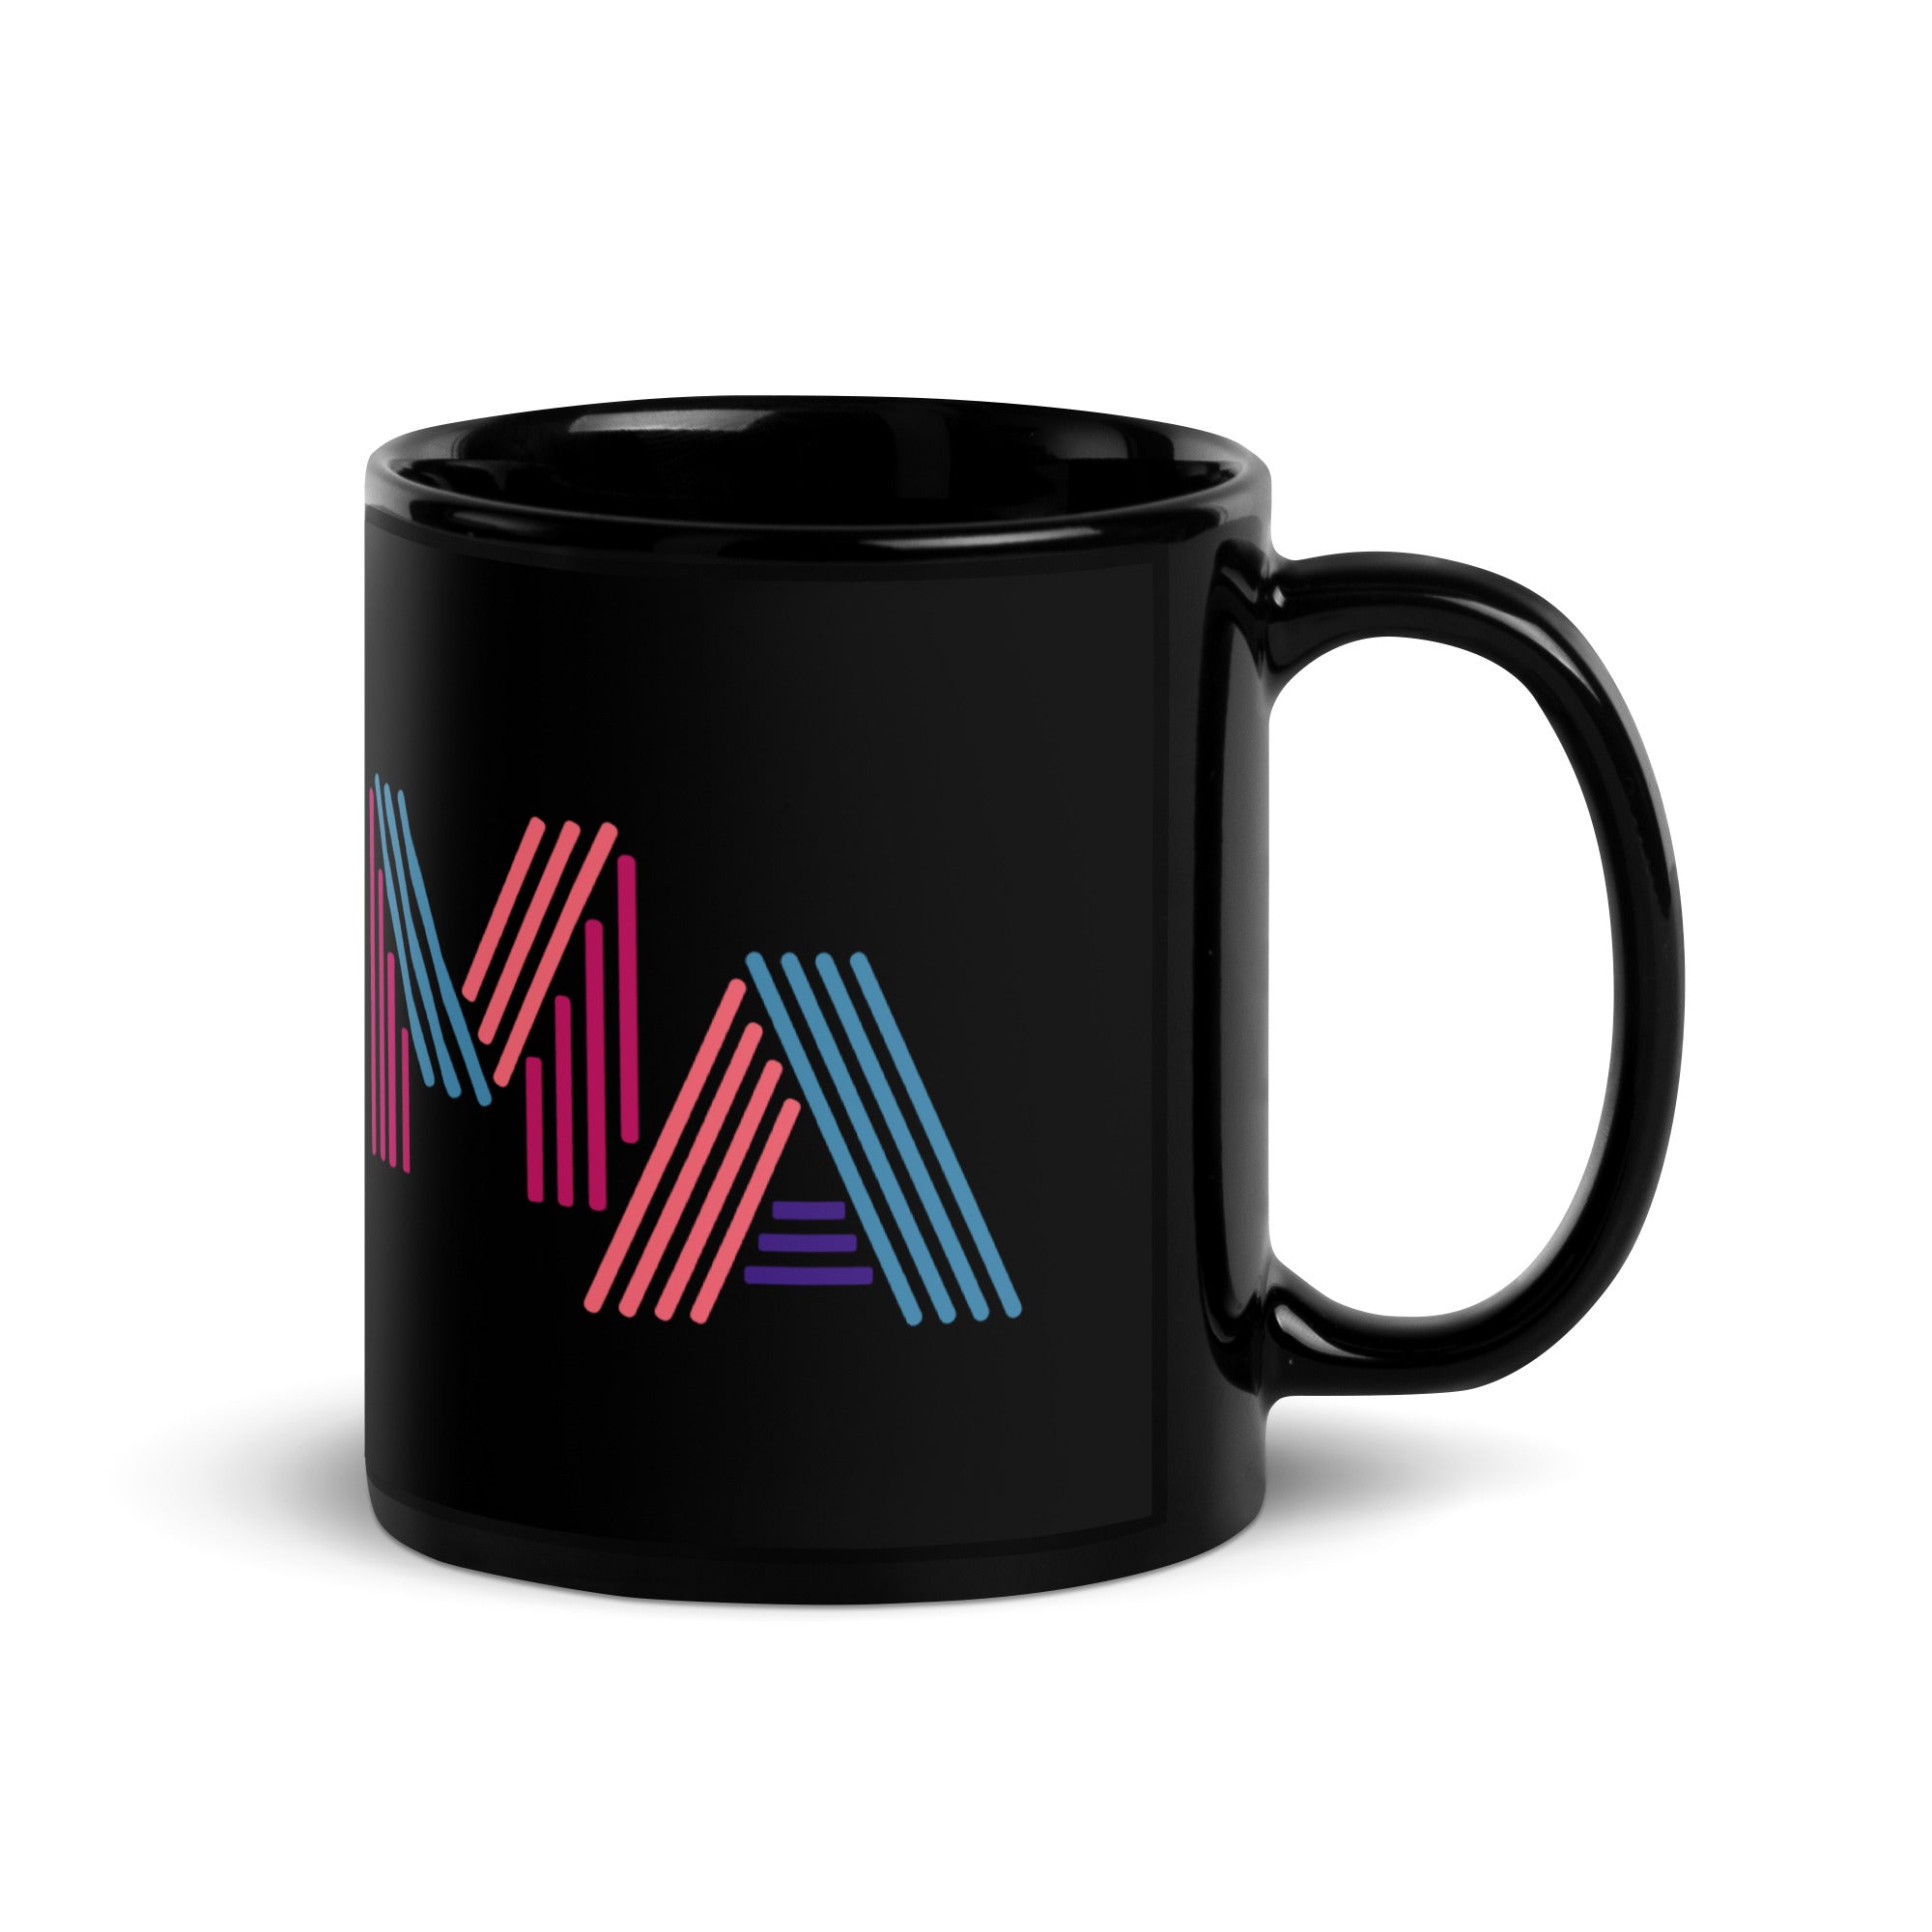 MA massachusetts in neon 90s style lettering on black glossy ceramic mug